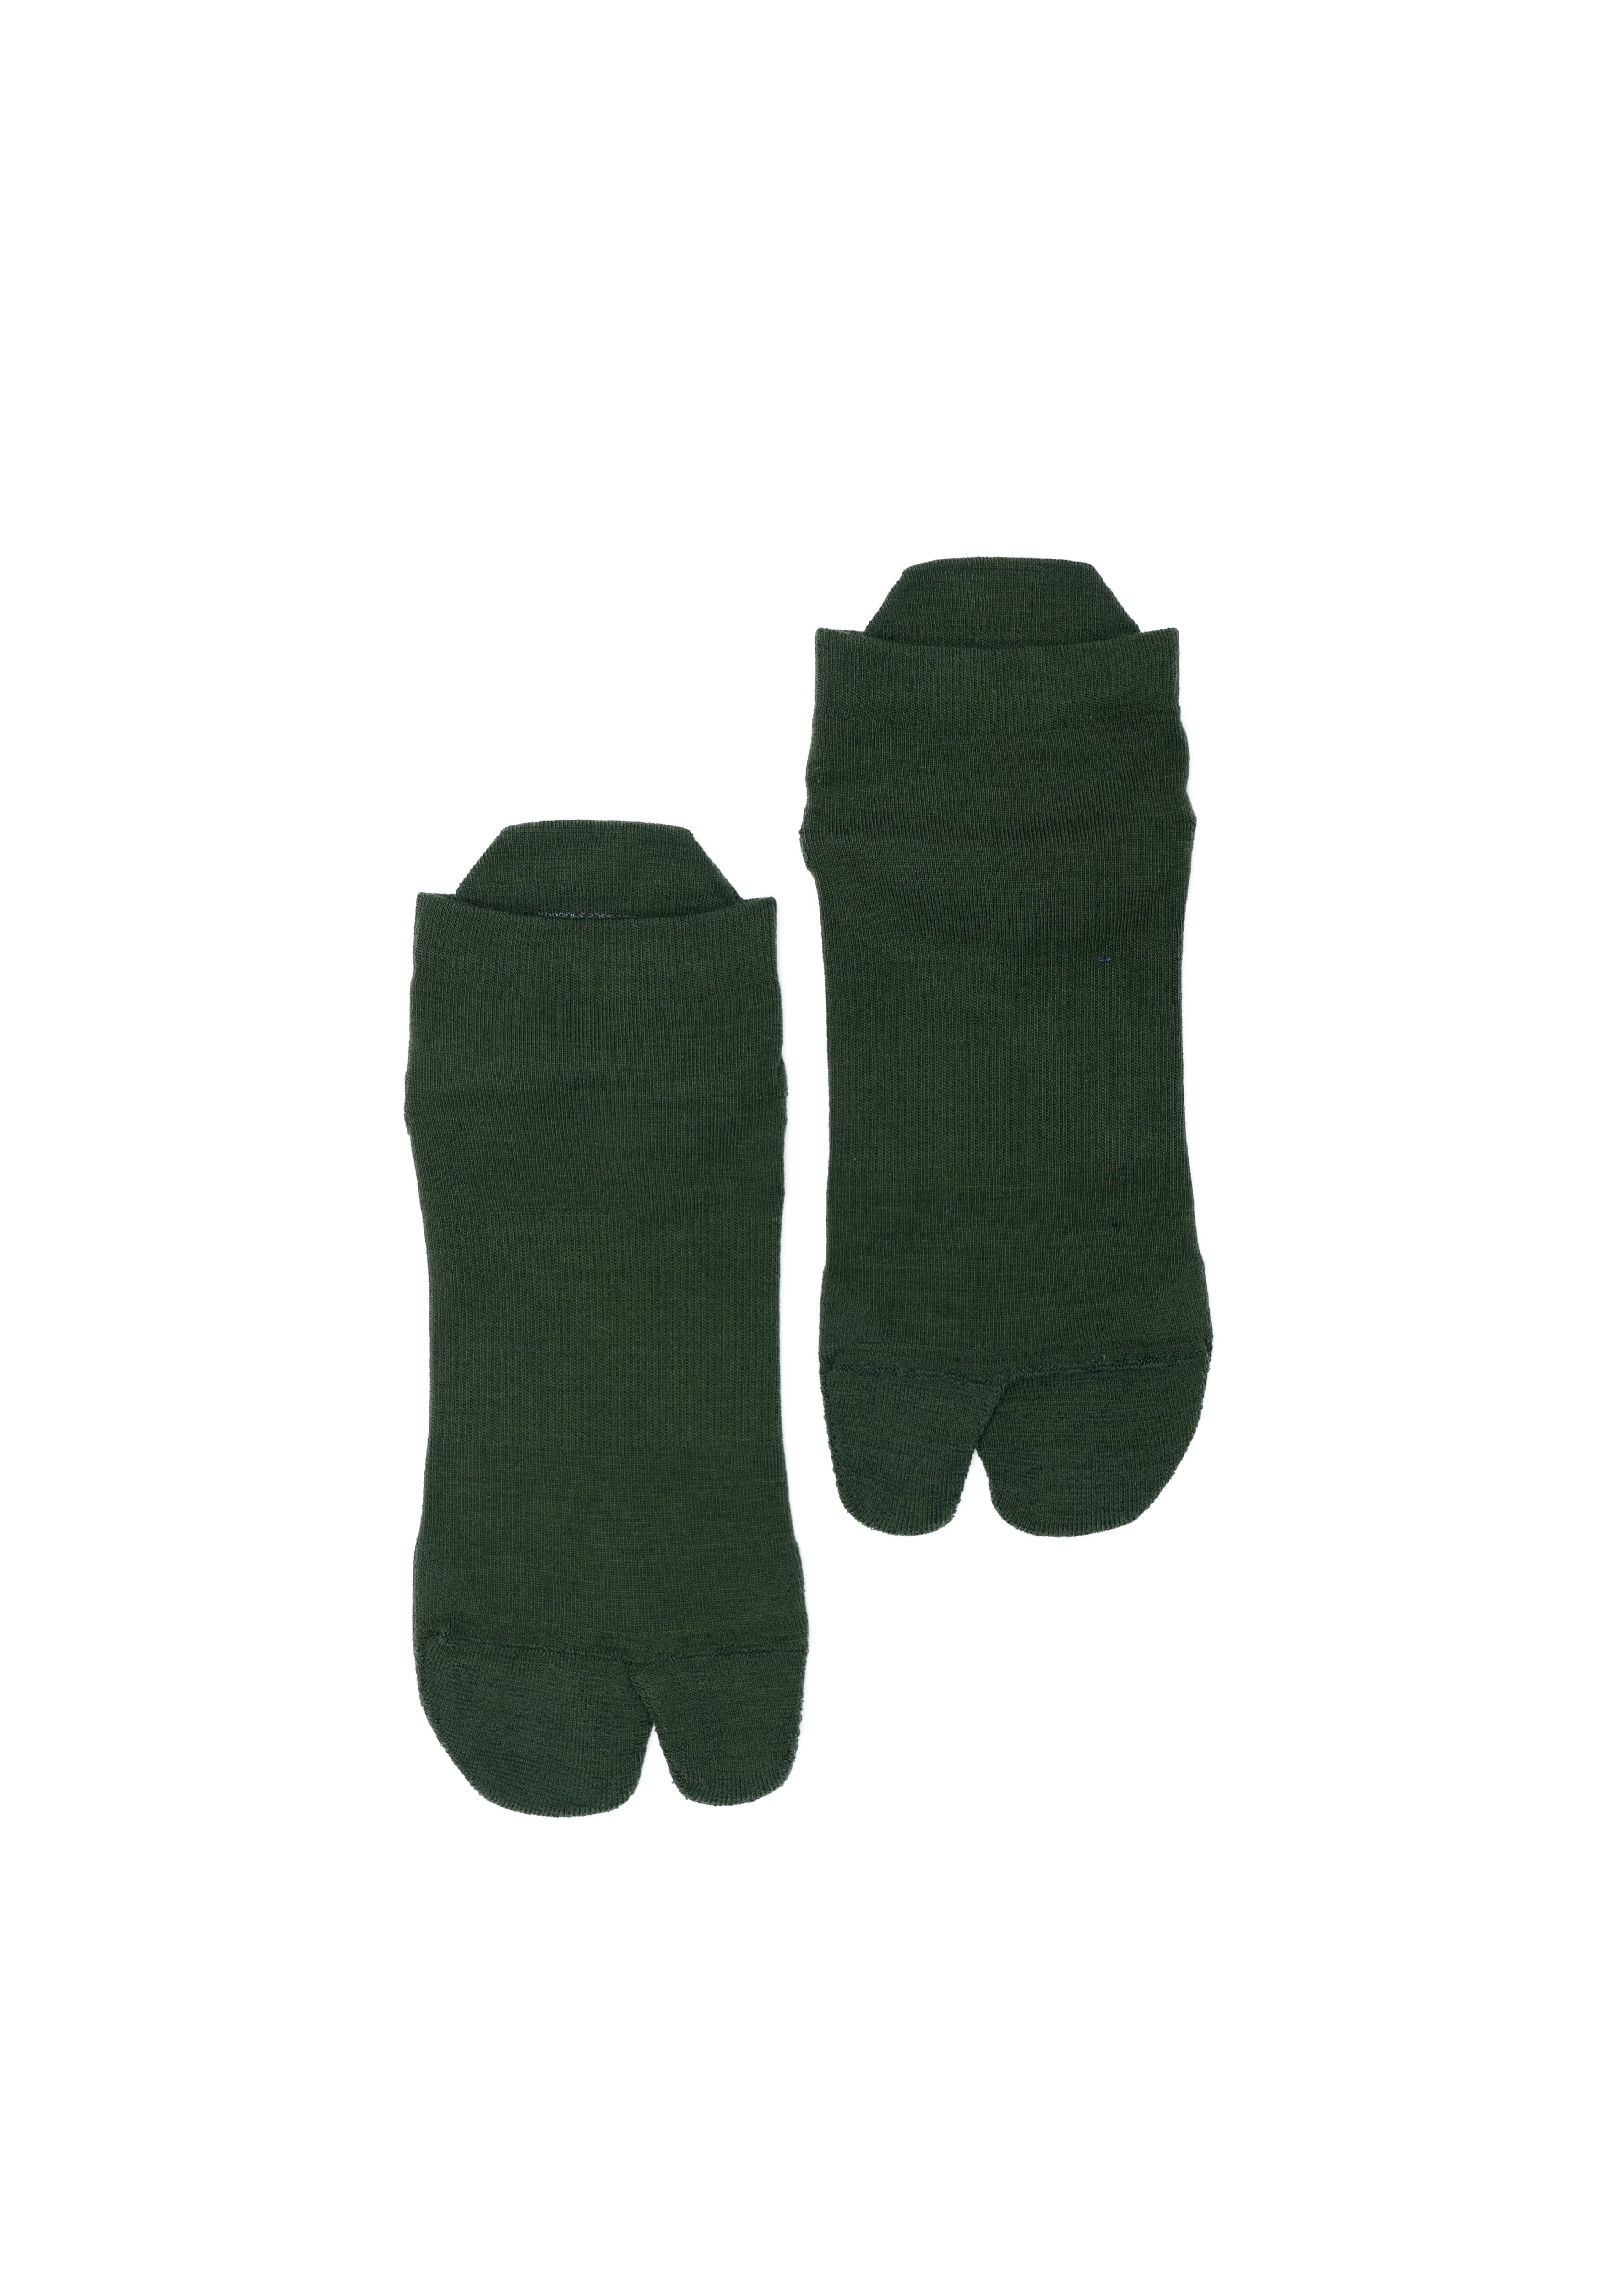 CORDURA 60/40 Ankle Socks (Green)